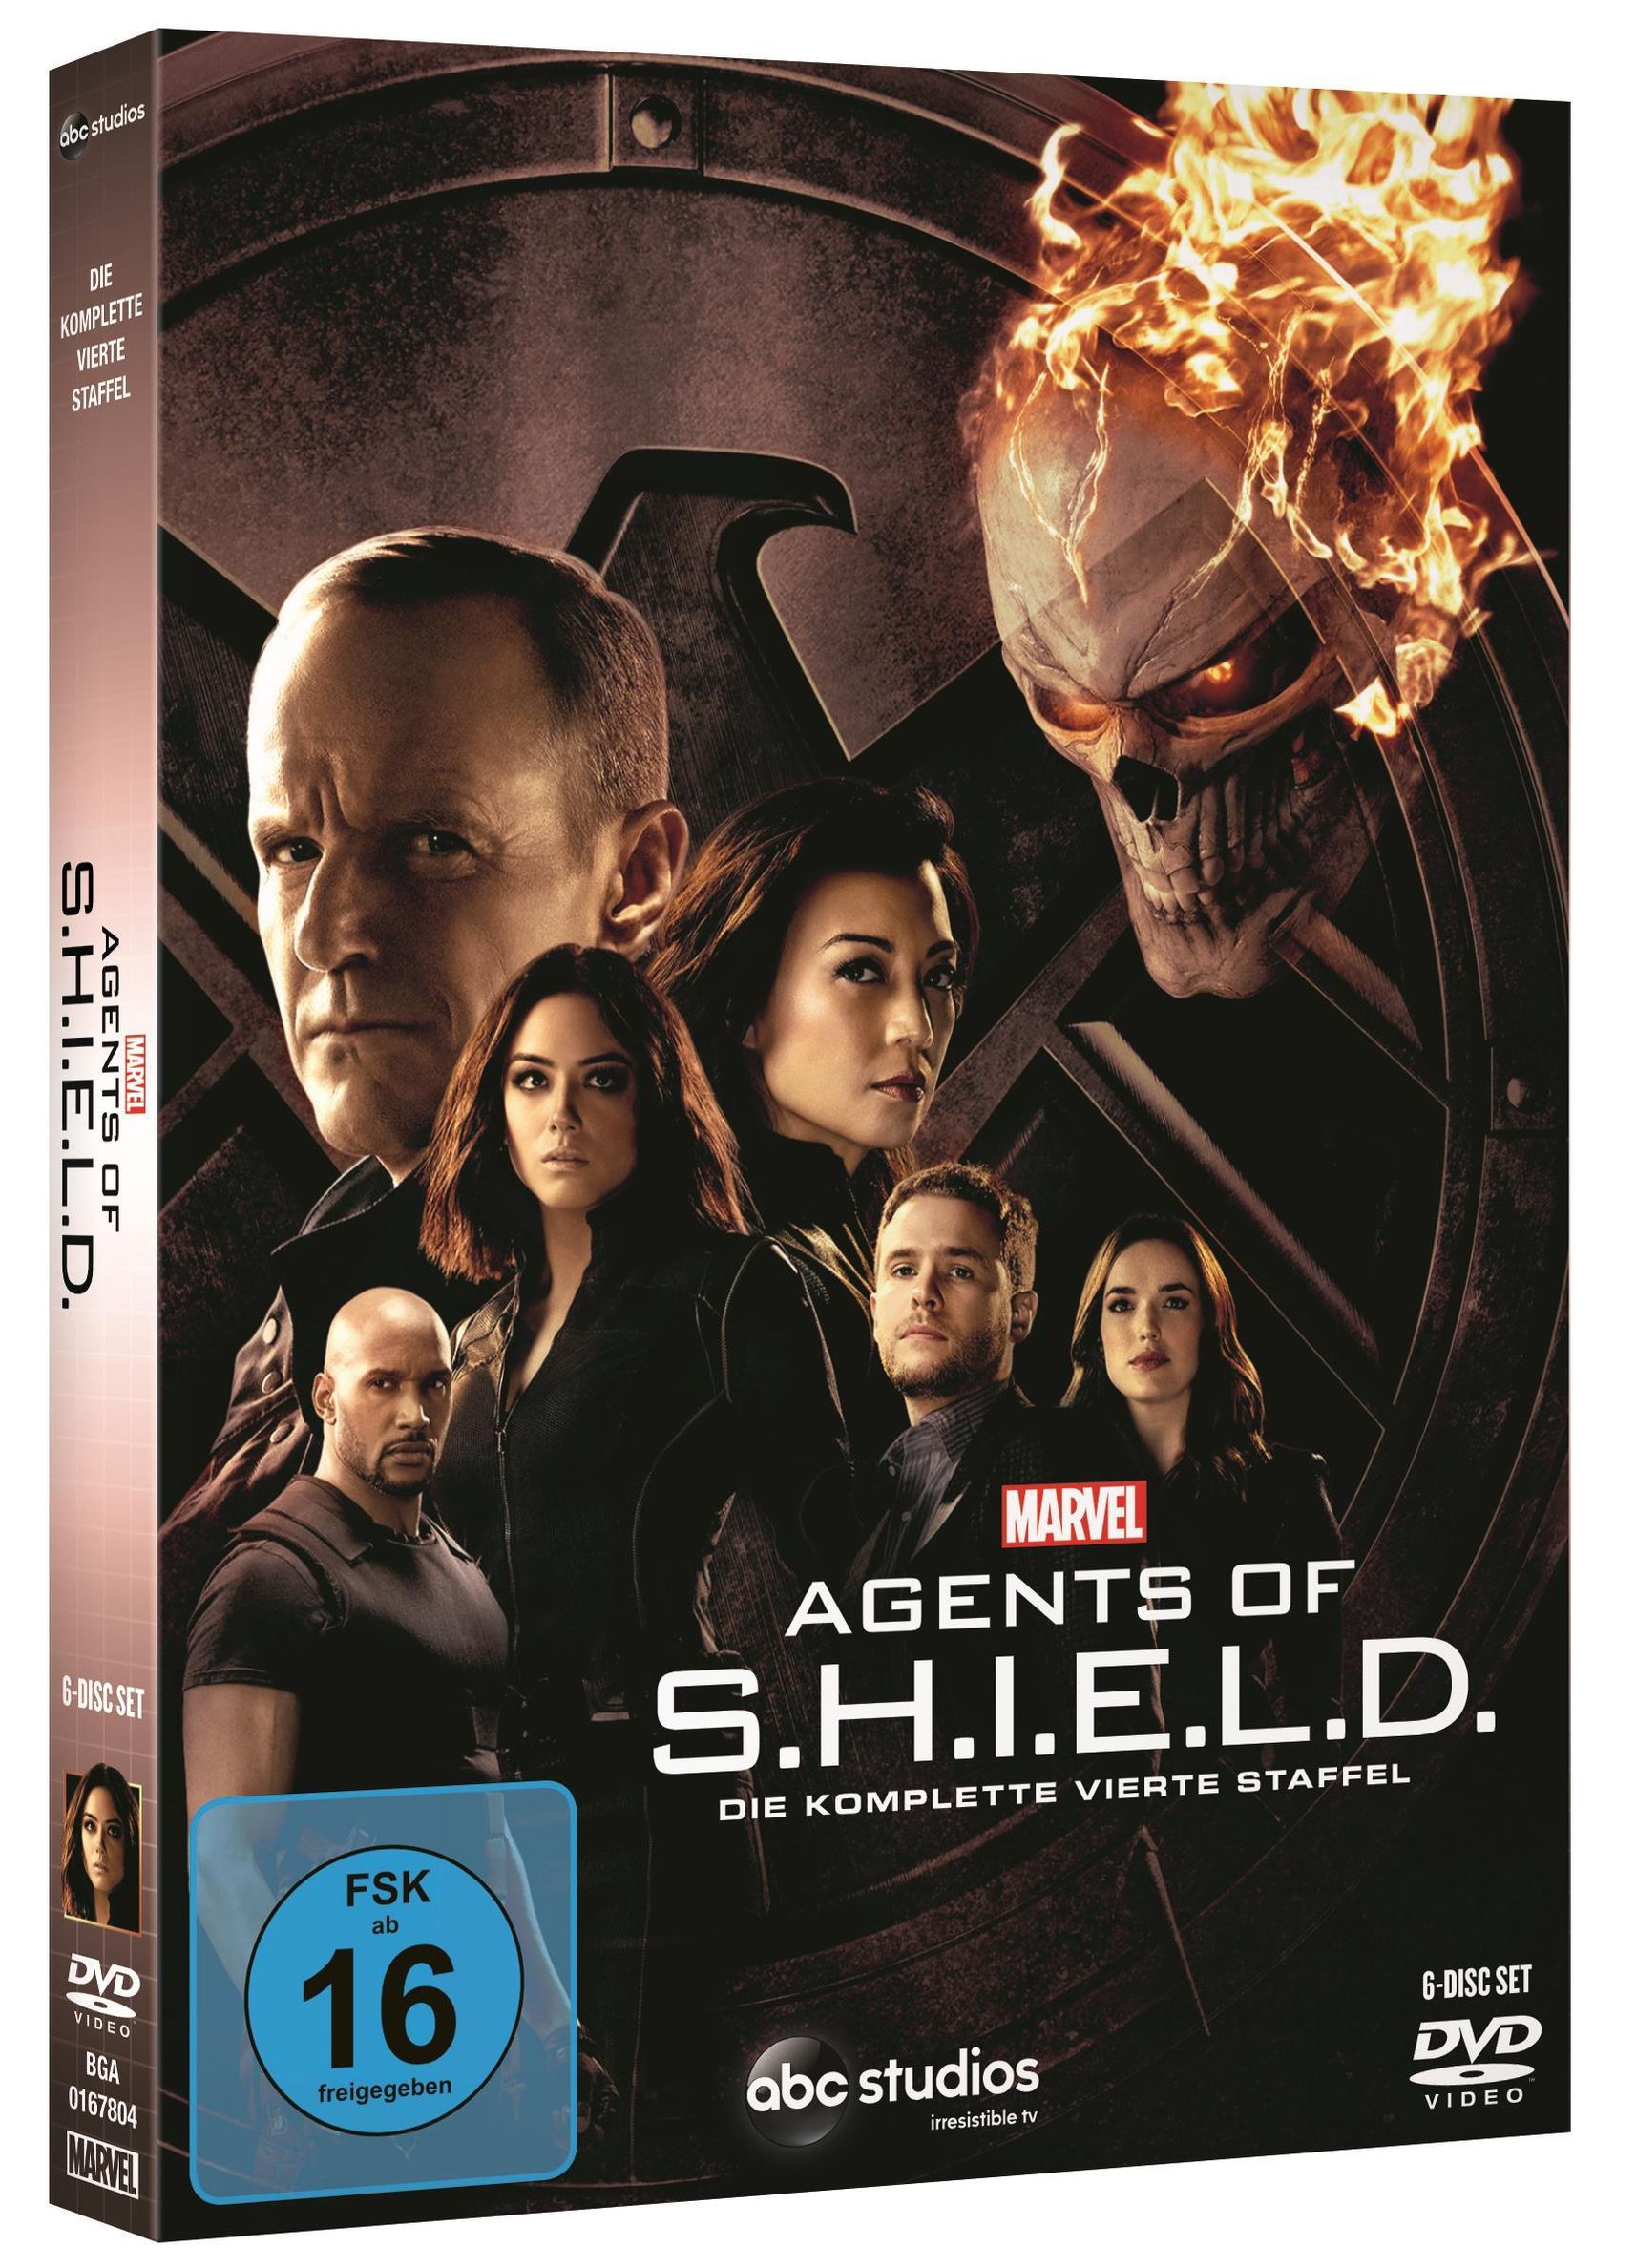 Marvel's Agents of S.H.I.E.L.D. - Staffel 4 DVD | Weltbild.de